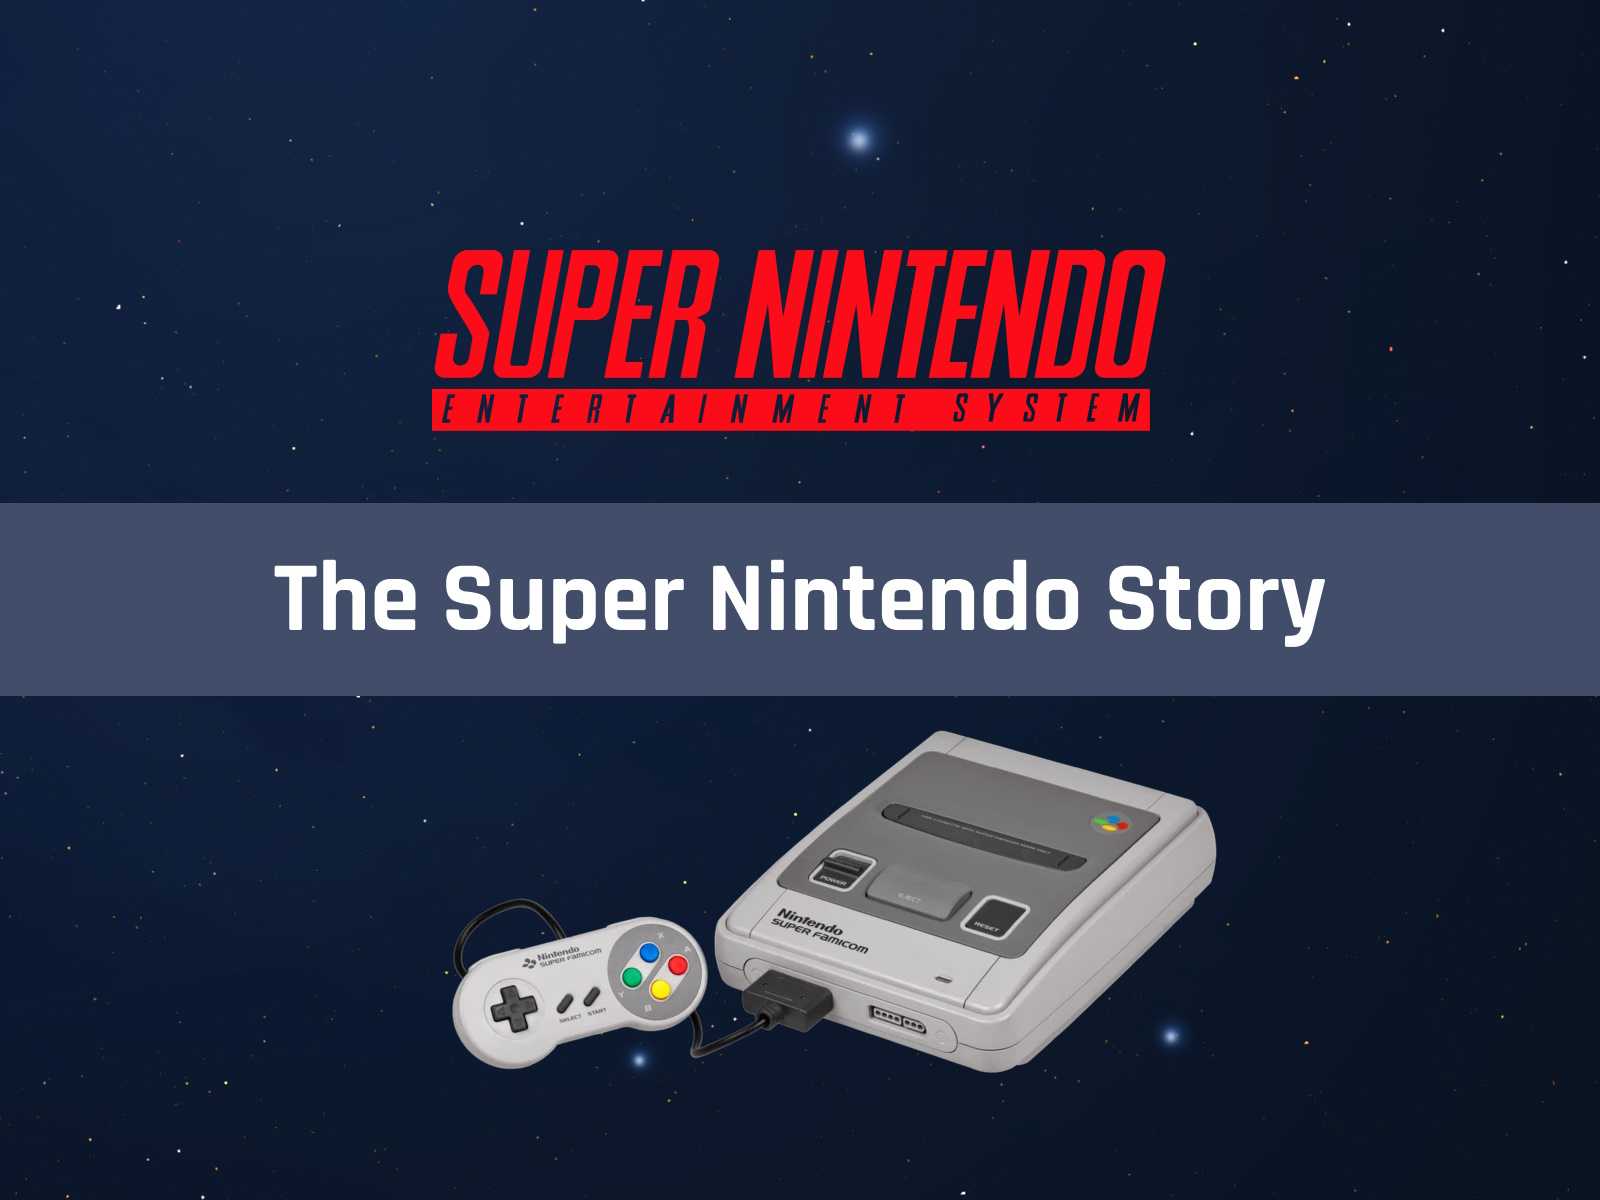 The Star Fox SNES Game Original Box Super Nintendo Used 